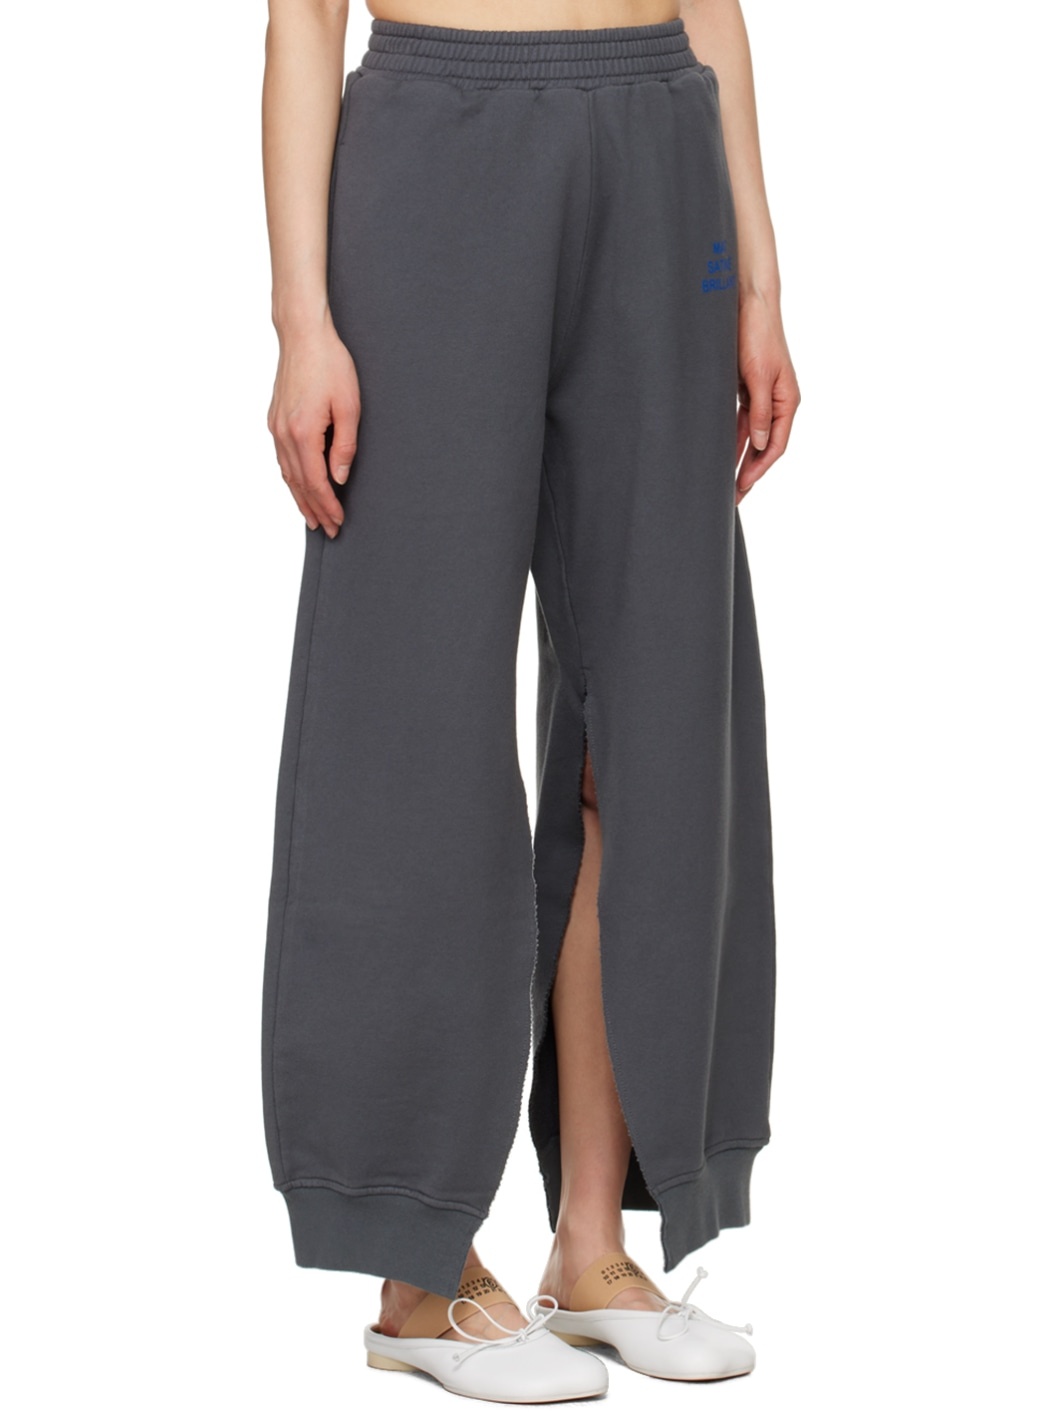 Gray Side Slit Lounge Pants - 2